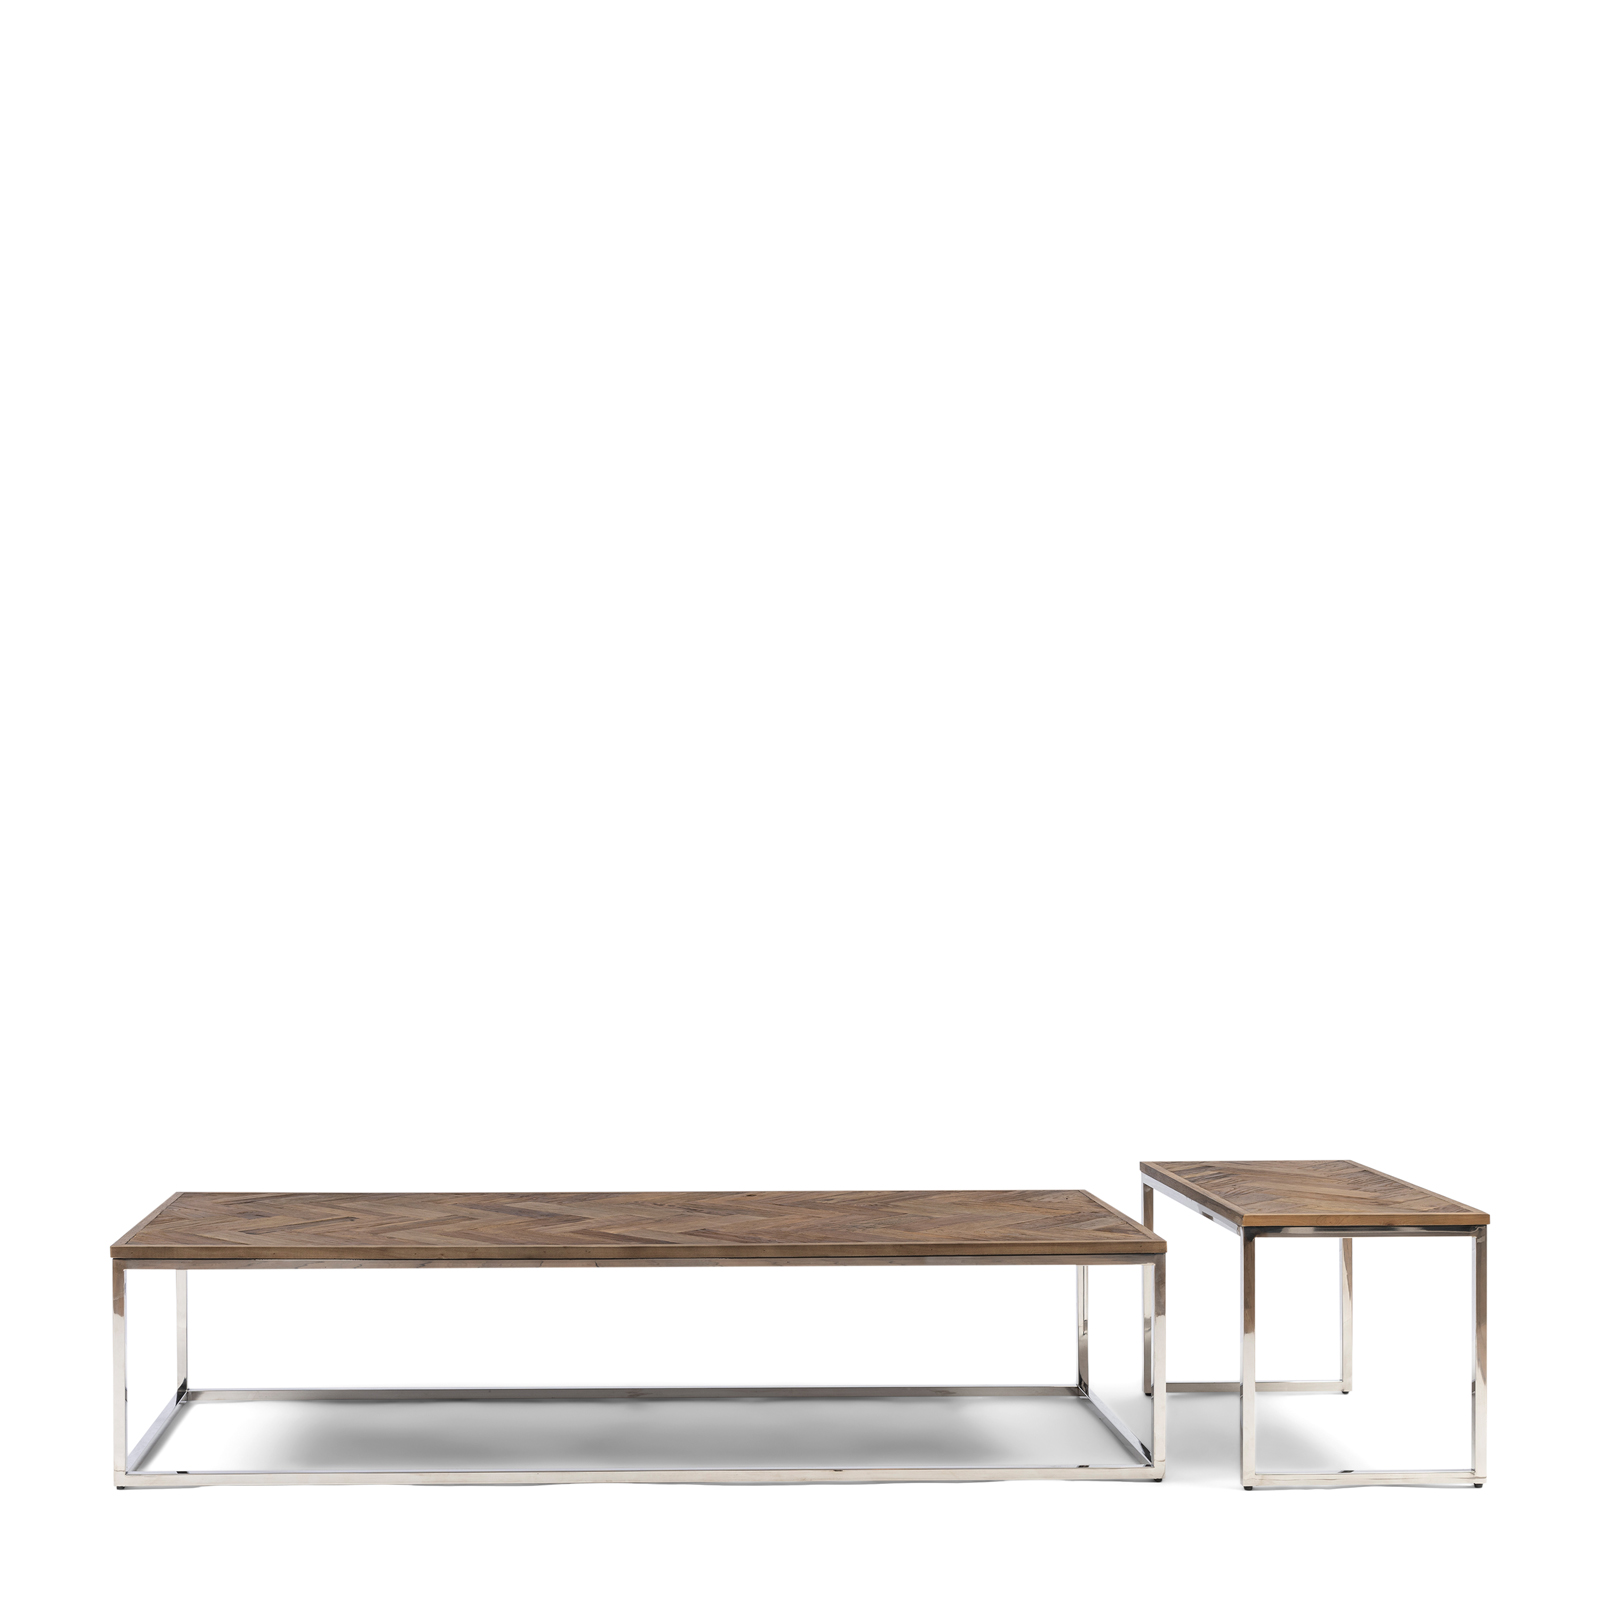 Bushwick Coffee Table Set of 2, 170x70 cm